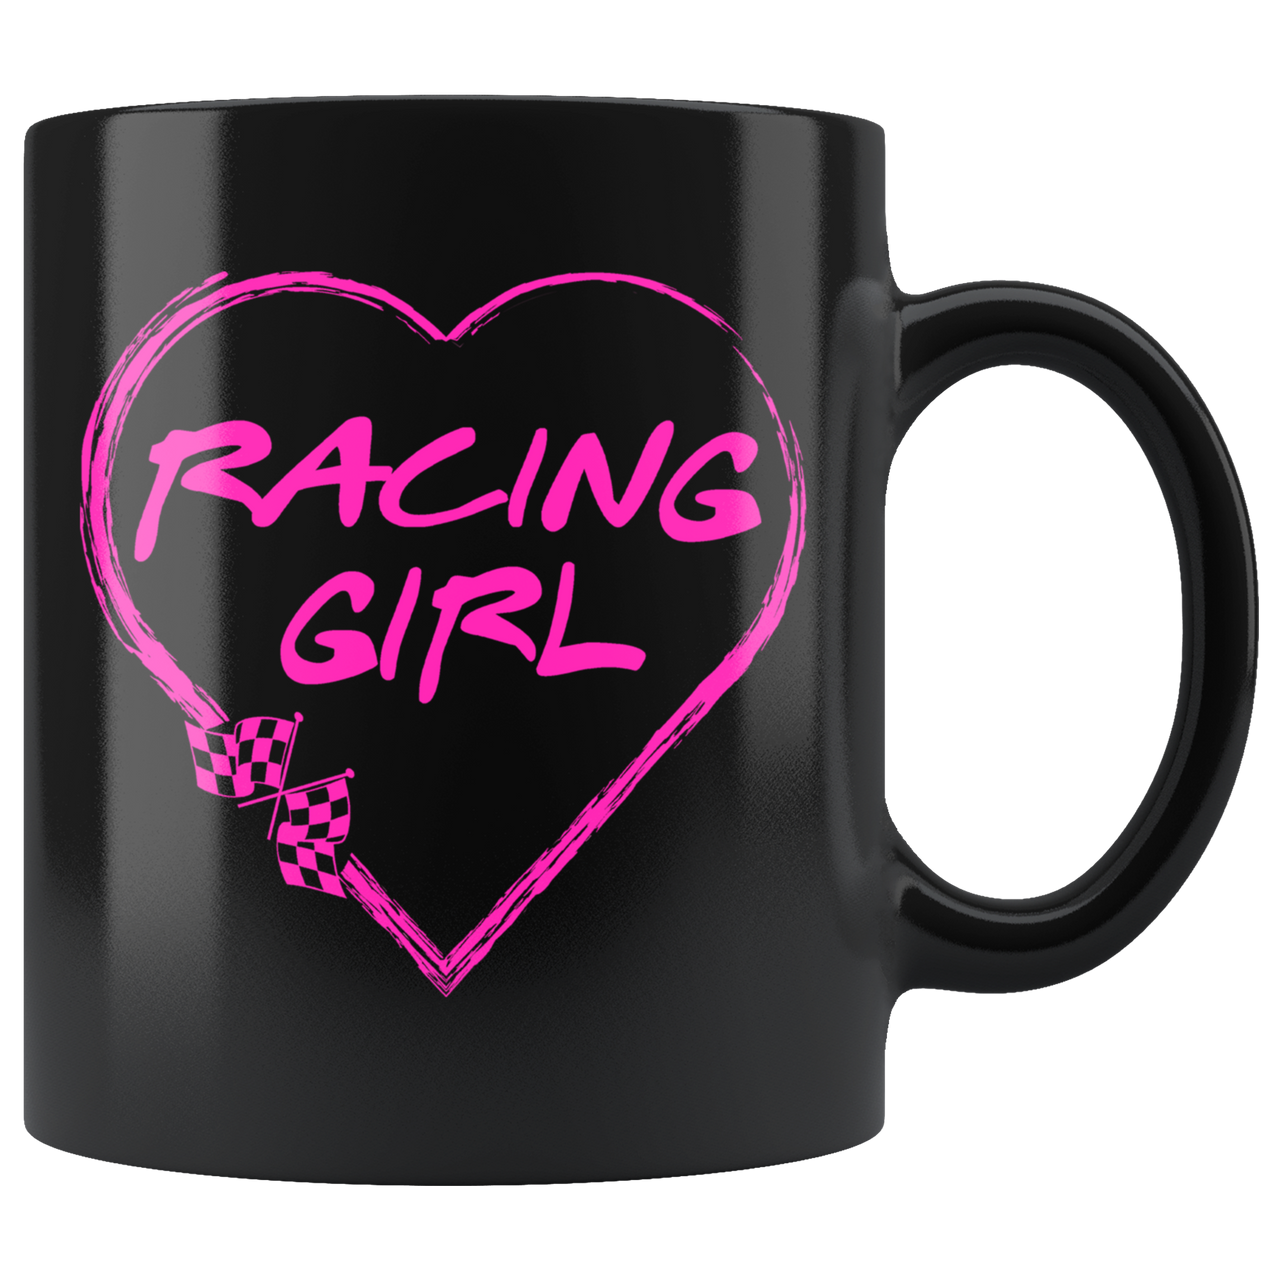 Racing Girl Heart Pink Version Mug!